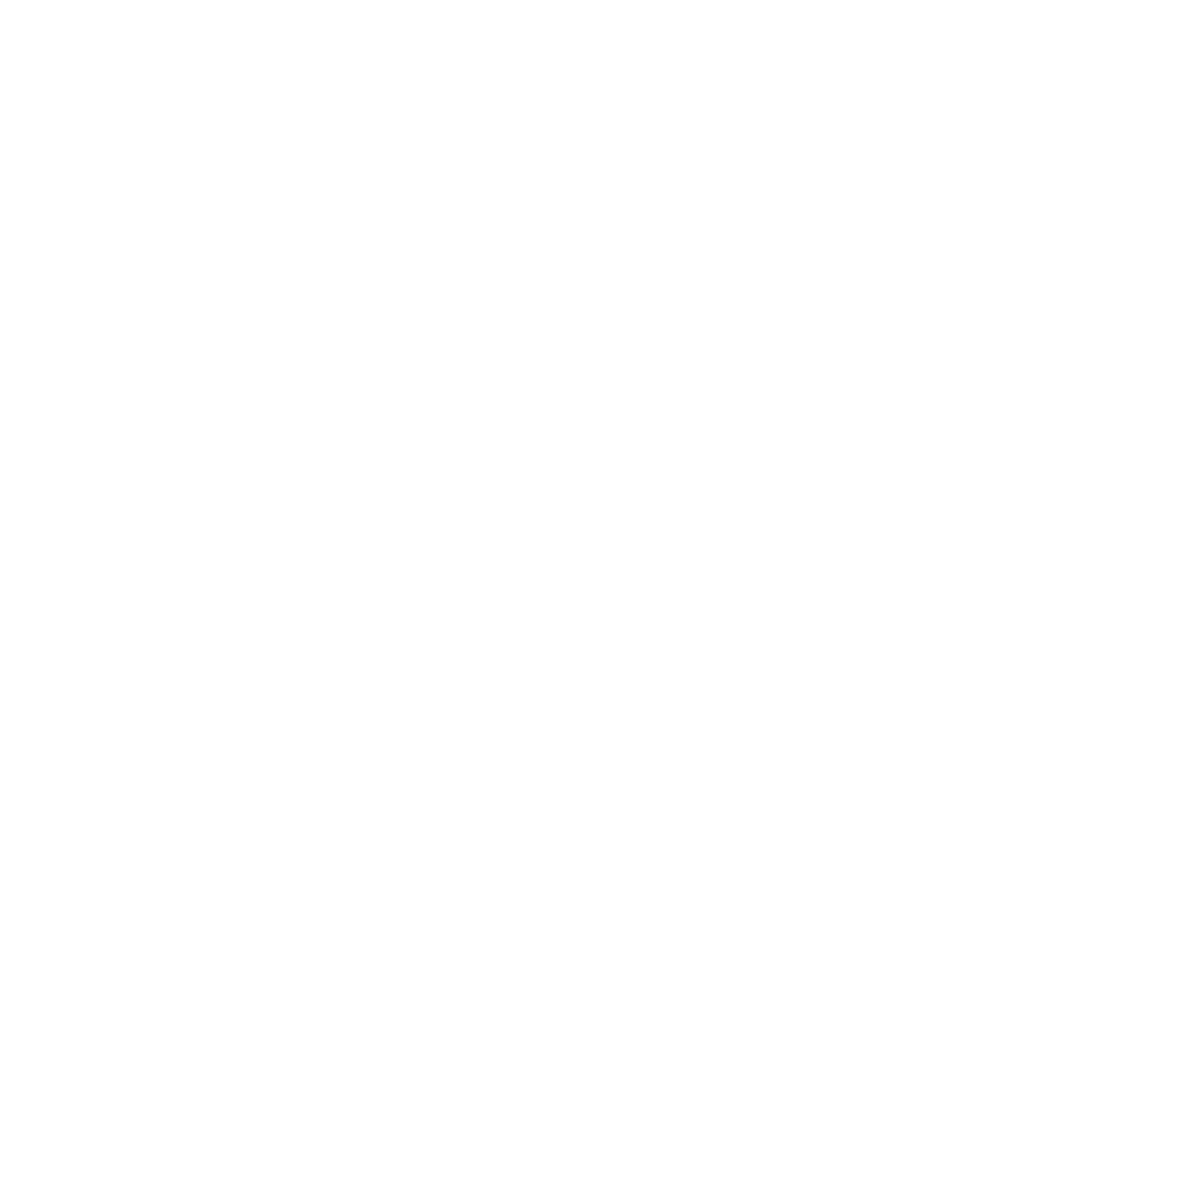 The Ayrshire Alps Challenge